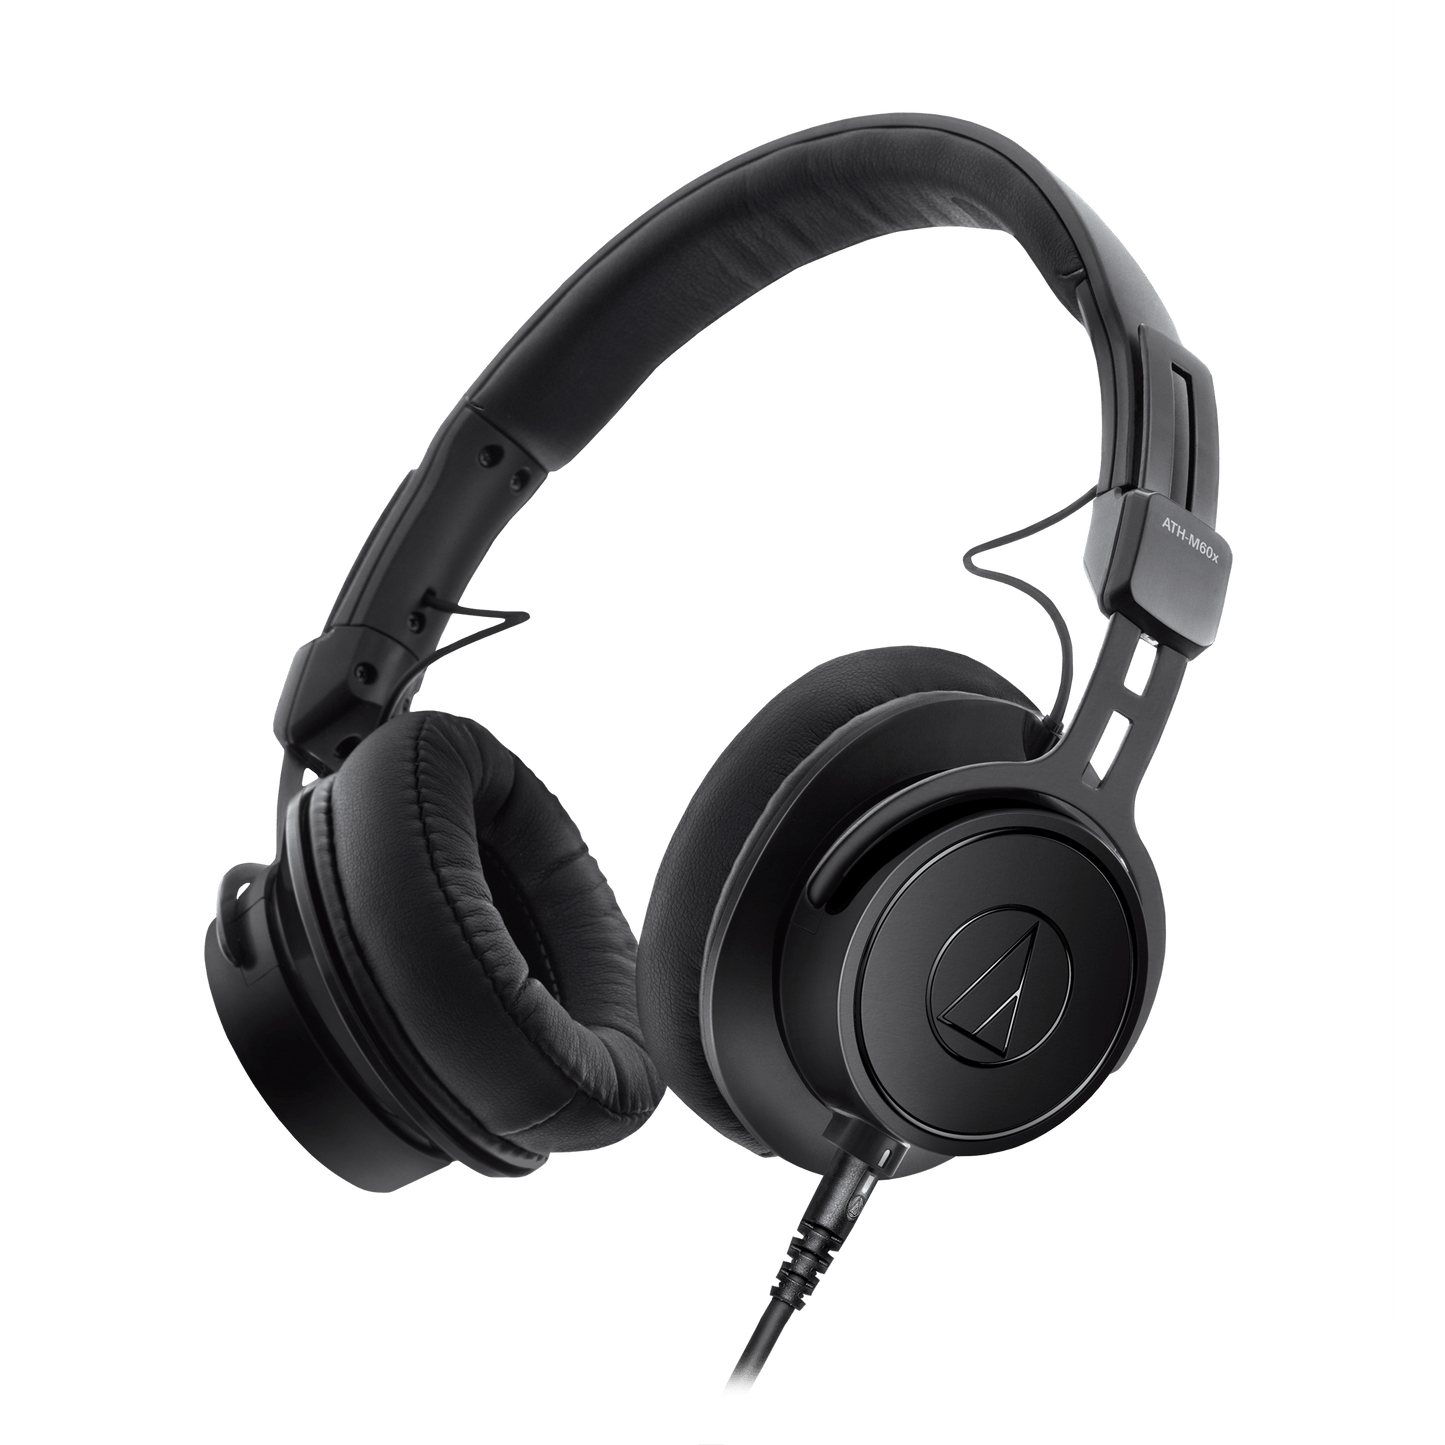 Audio Technica ATH-M60x On-Ear Professional Monitoring Headphones